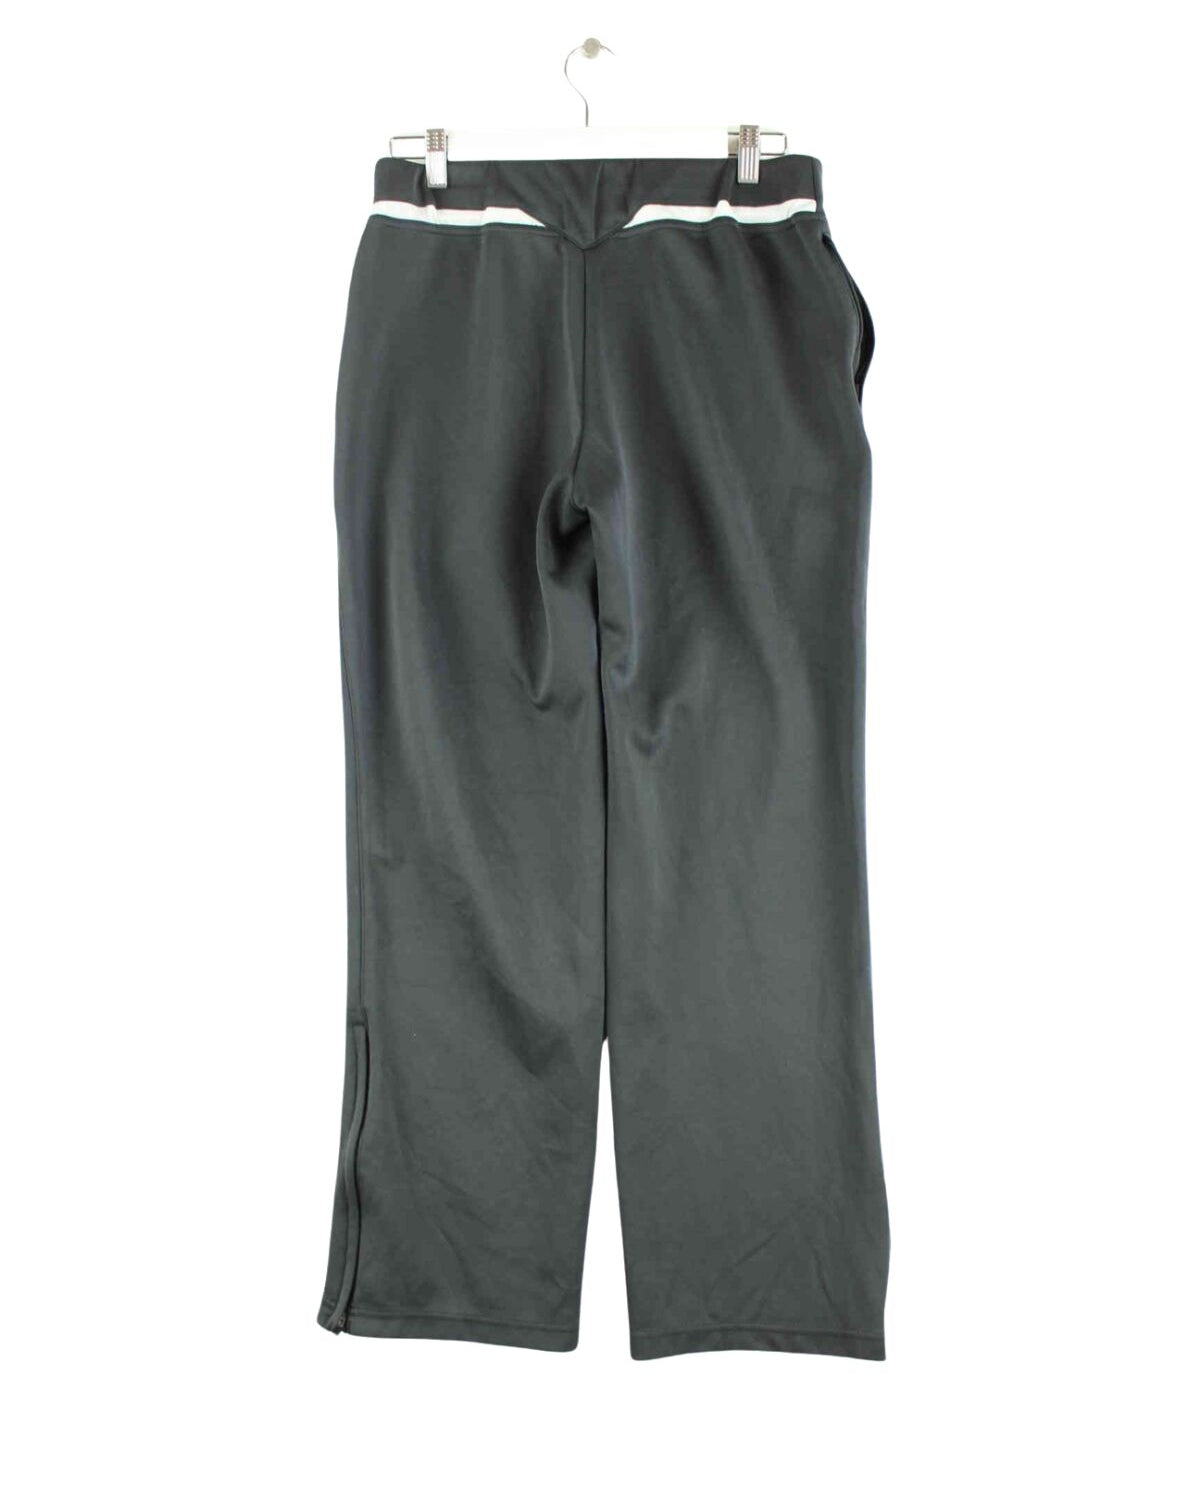 Nike Track Pants Grau S (back image)